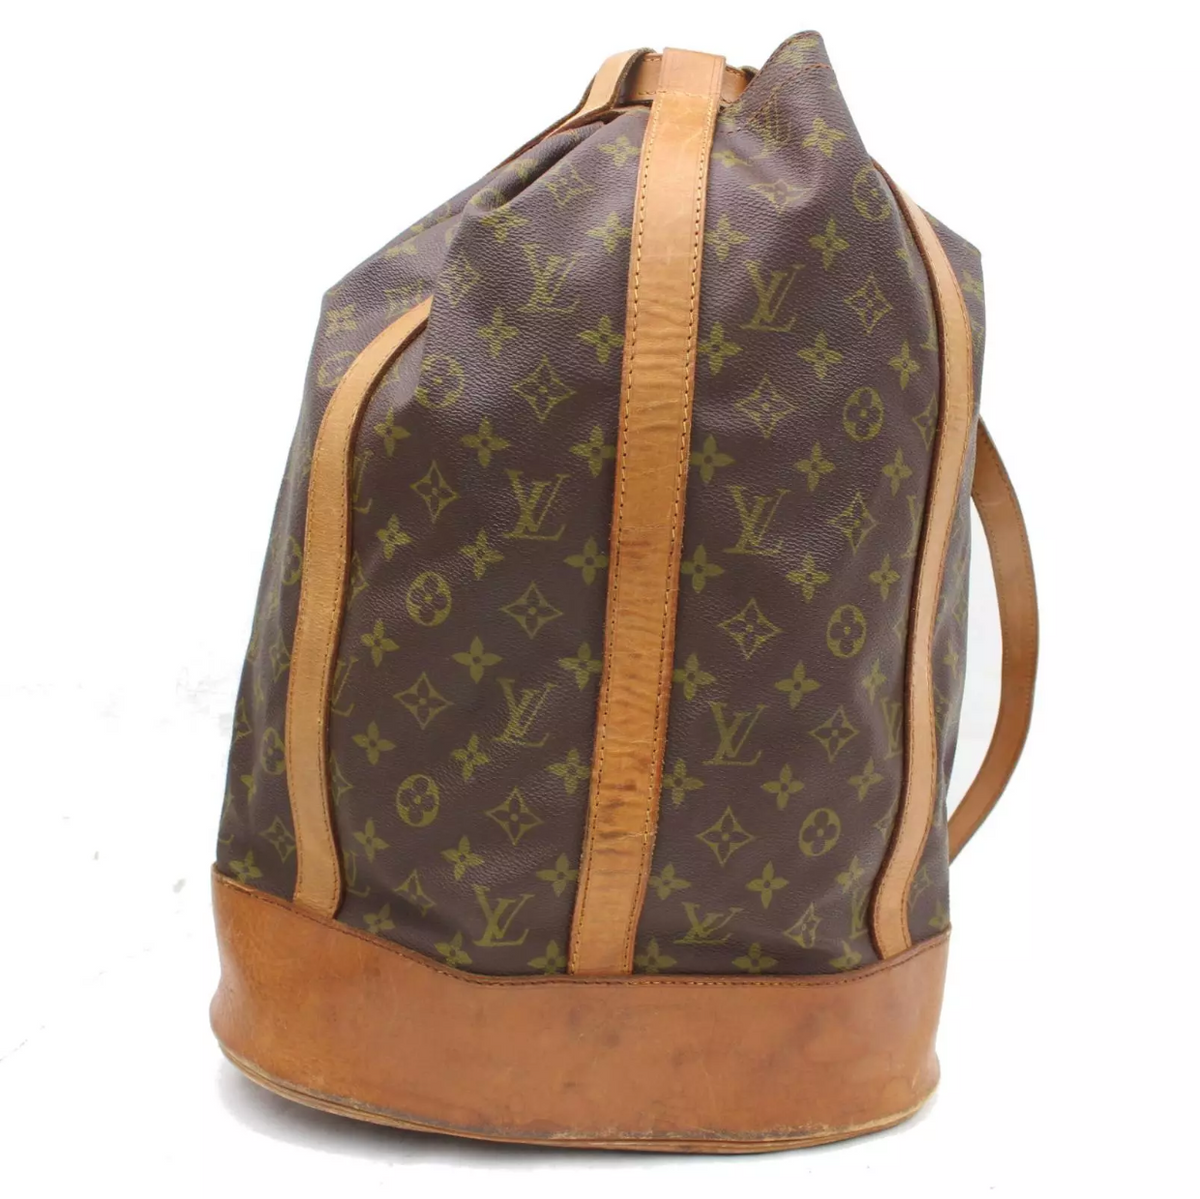 Are Louis Vuitton Bags Canvas